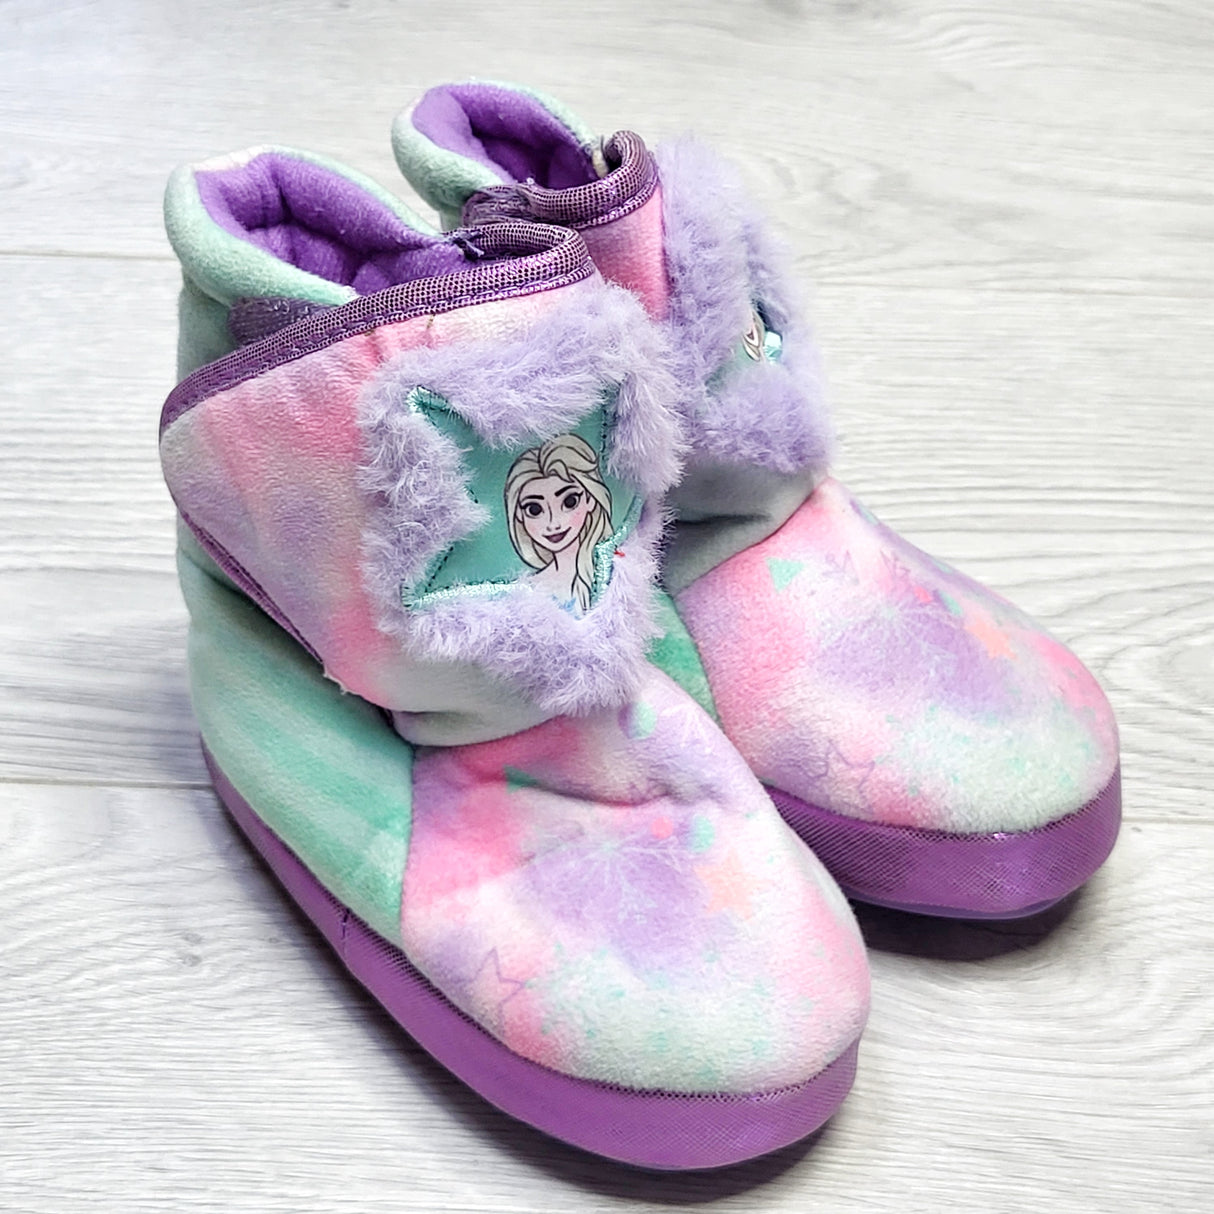 KJHN2 - Frozen 2 plush hard sole slipper boots. Size 5/6